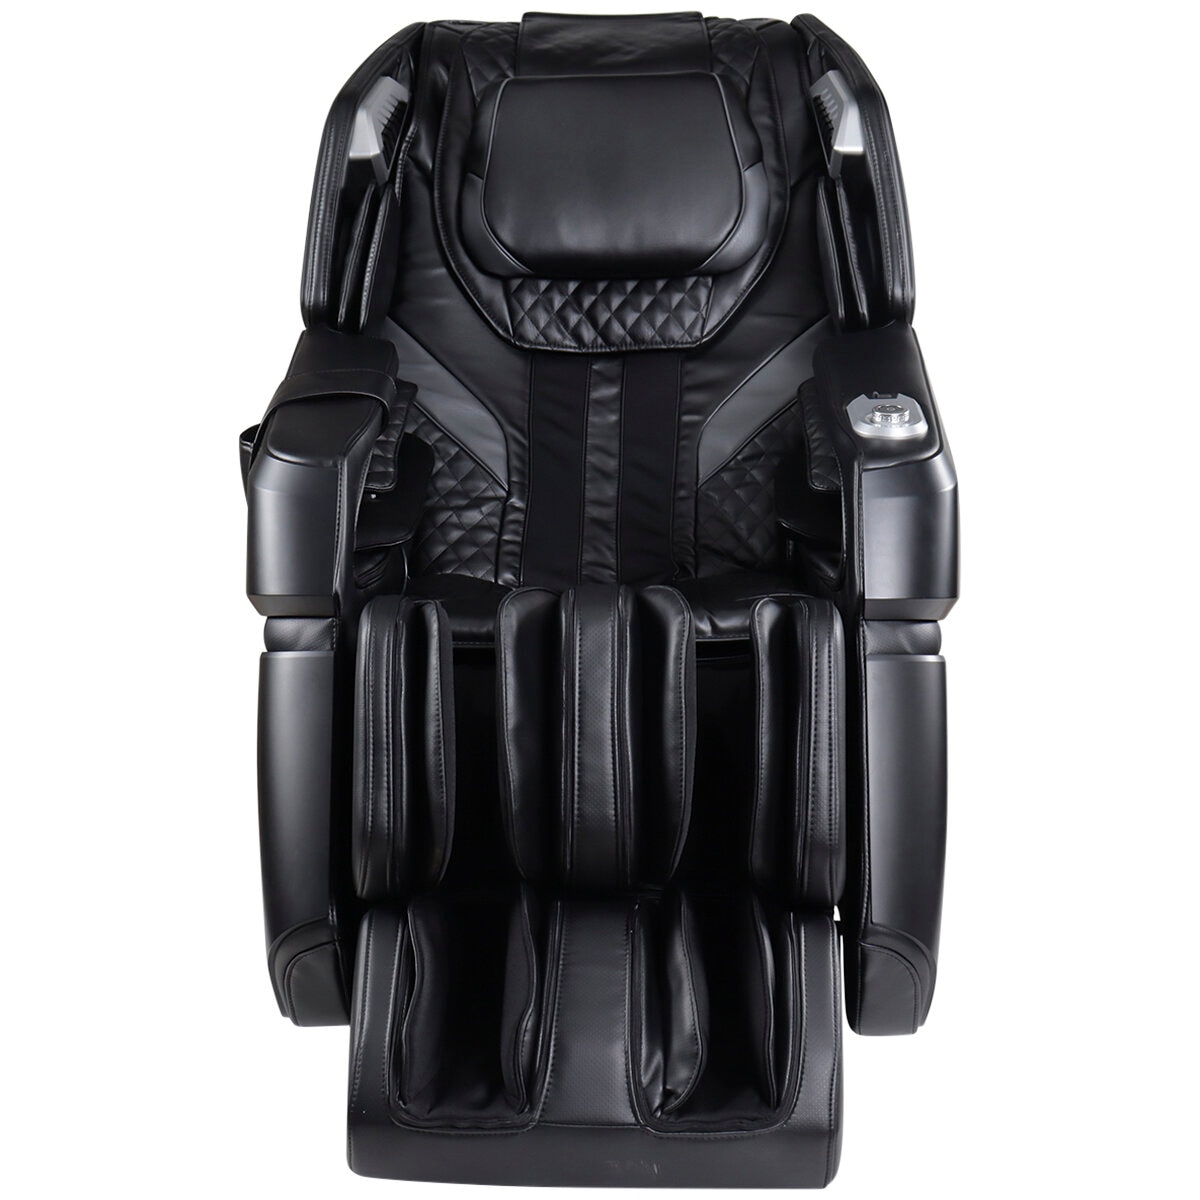 Iyume 6890 3d Deluxe Massage Chair Costco Australia